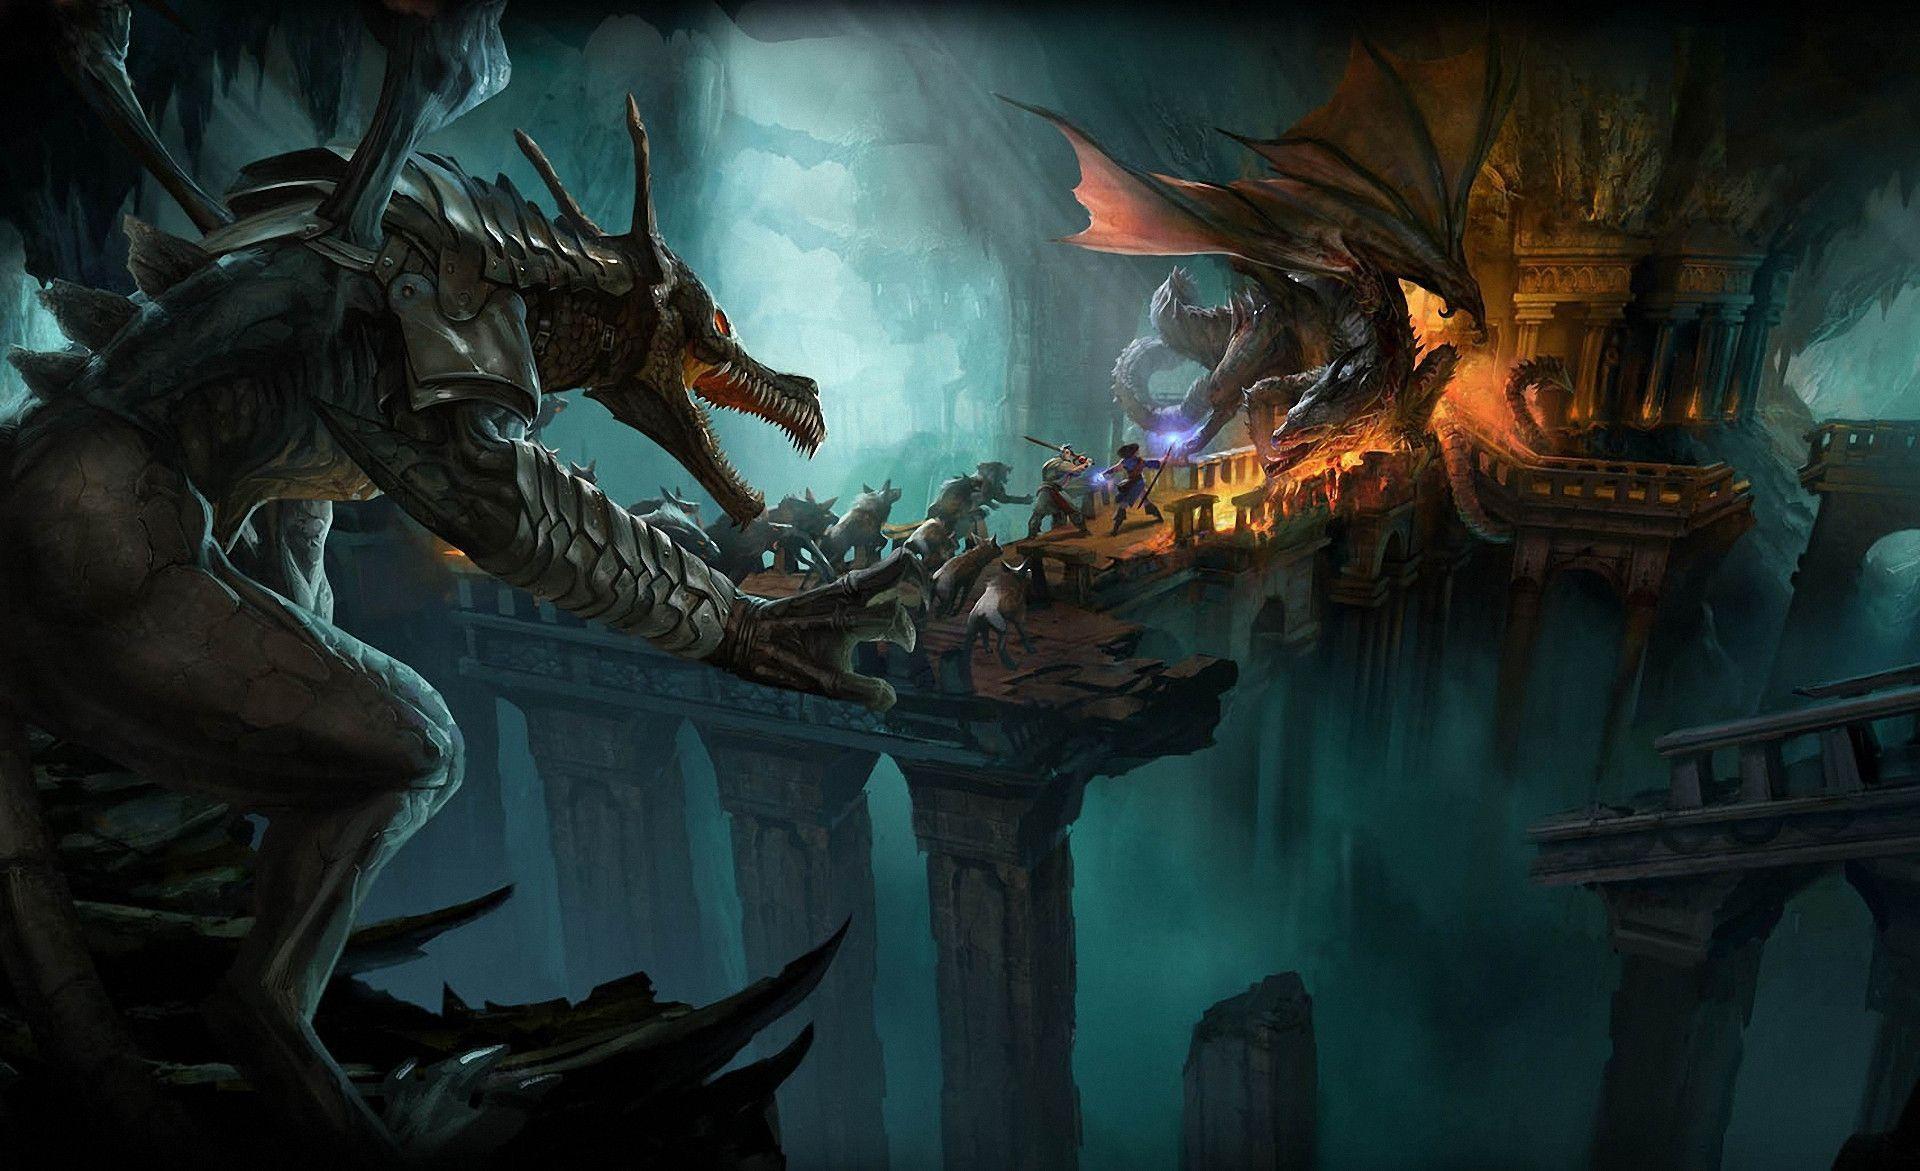 Download wallpaper battle, travelers, Dungeon, Dragons free